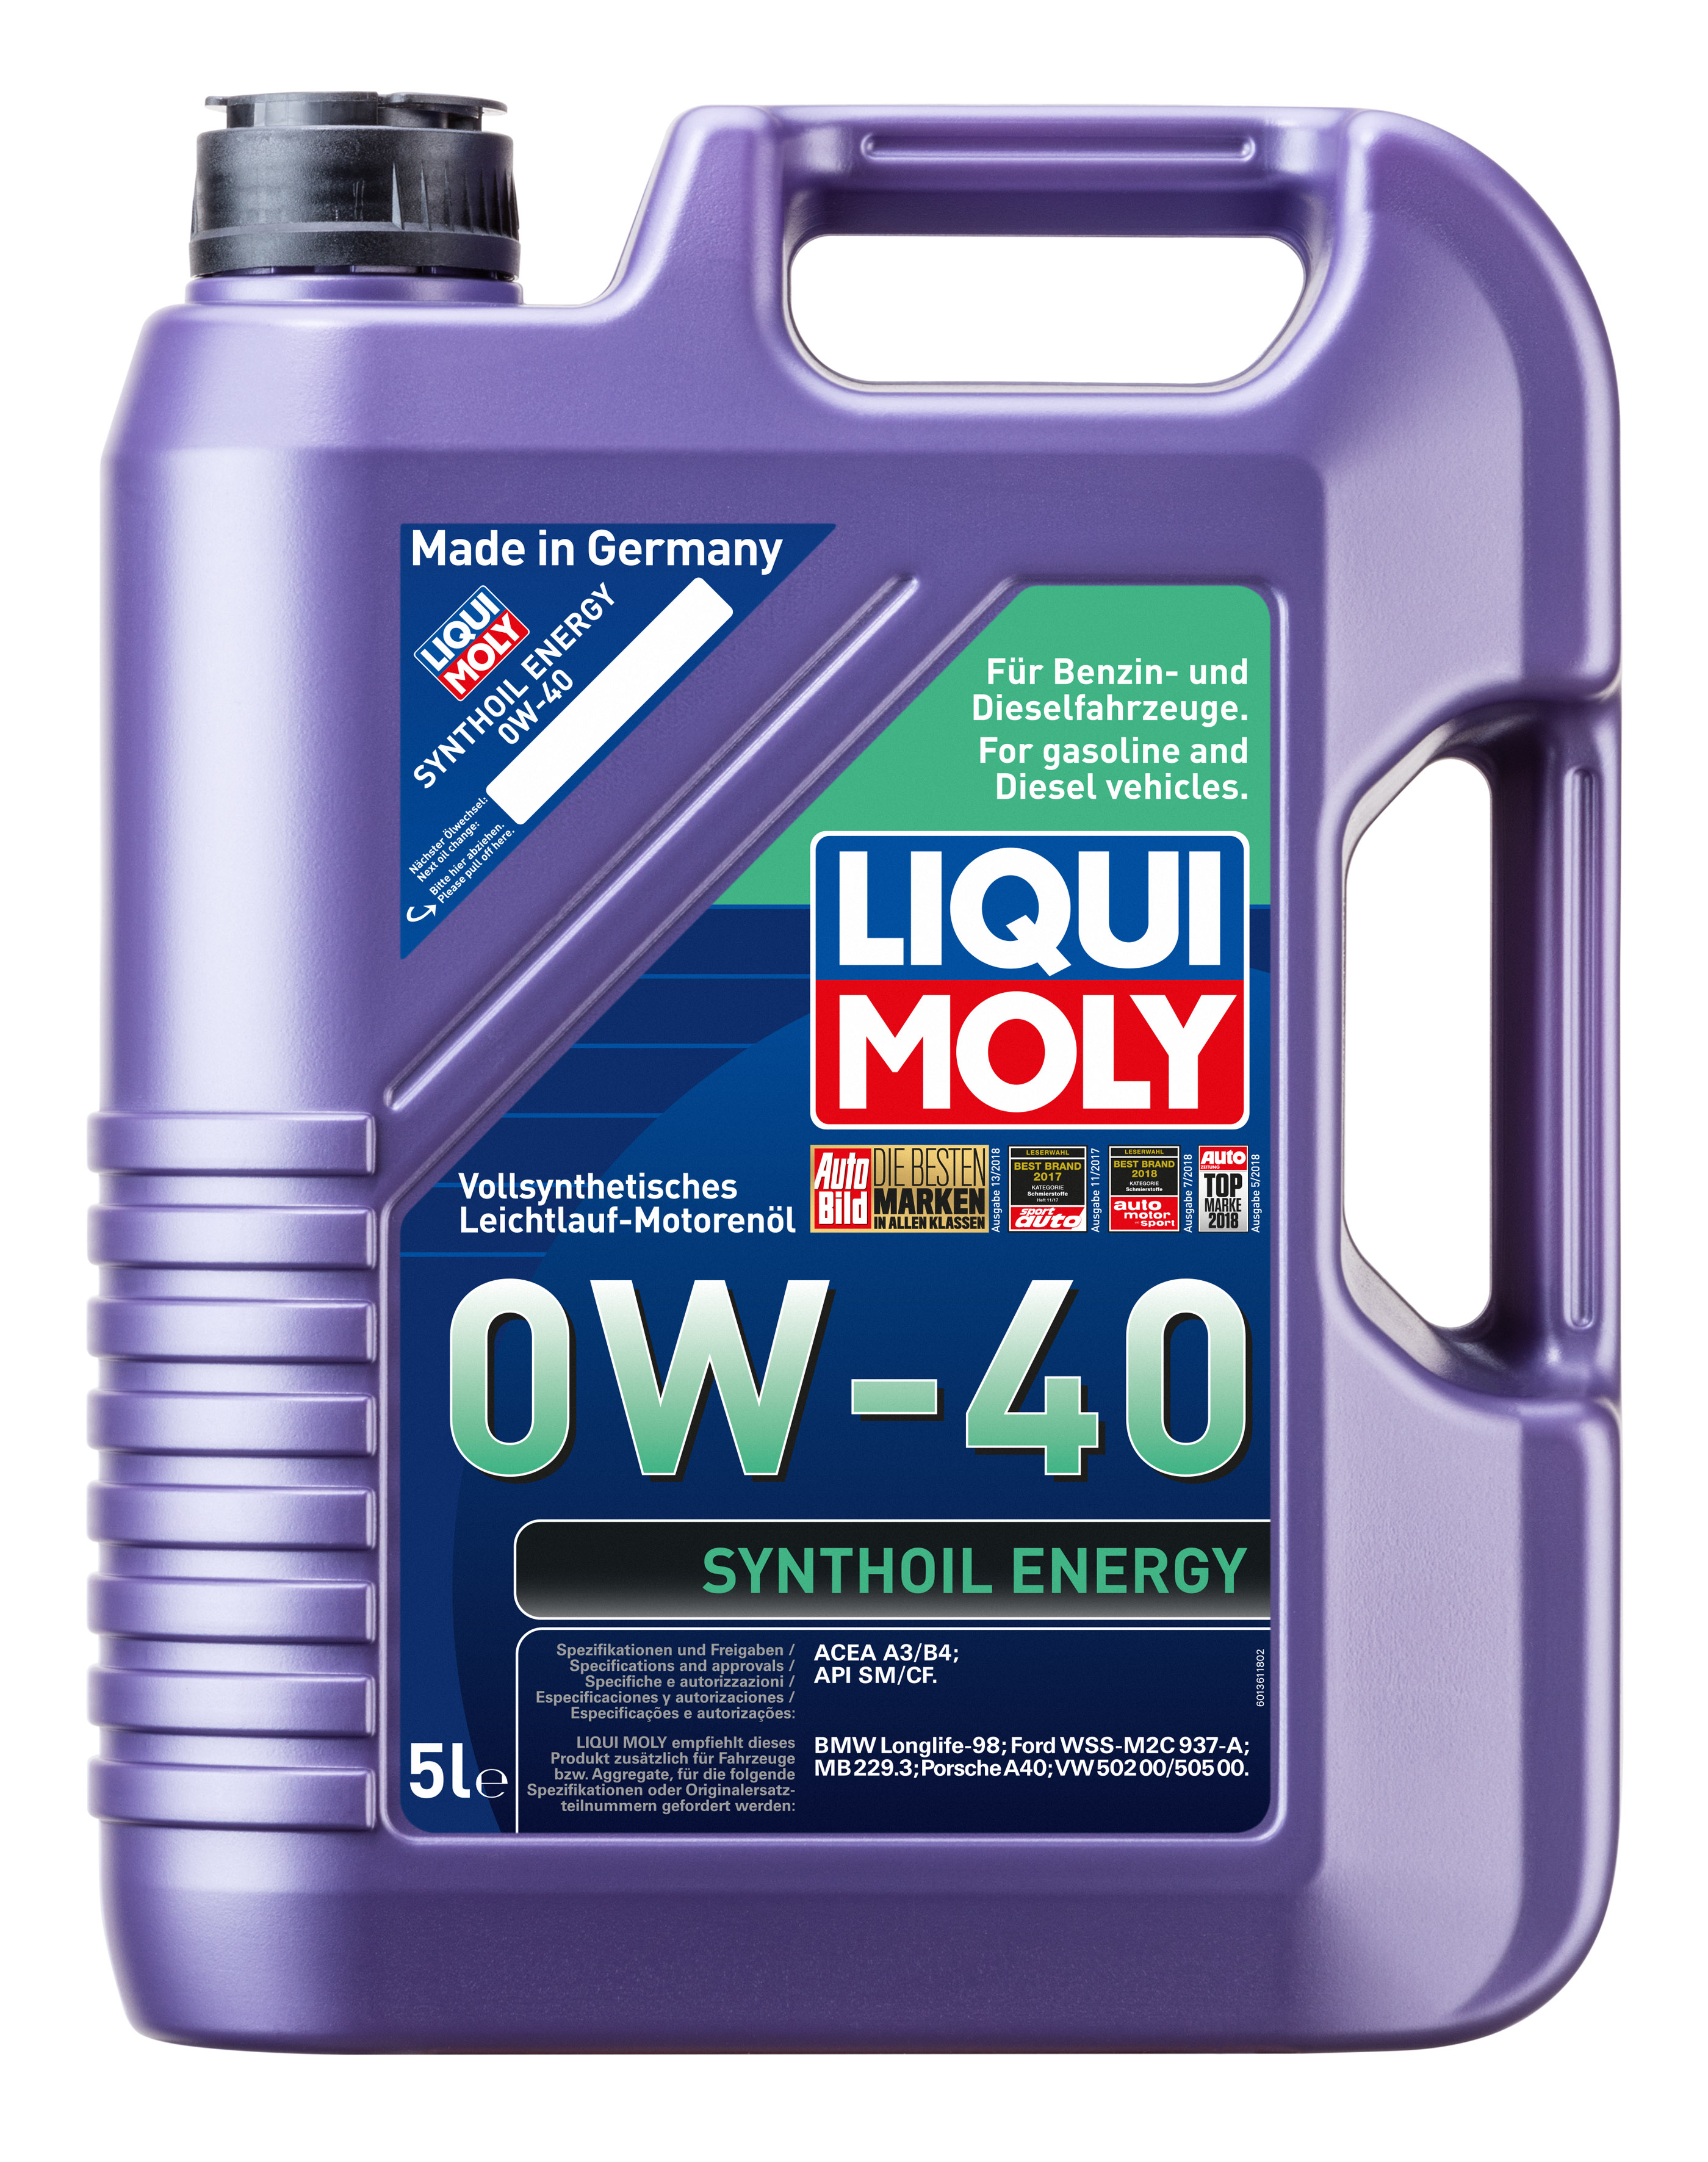 LIQUI MOLY SYNTHOIL ENERGY 0W-40 - ALLZU Motorenbau : アルツ